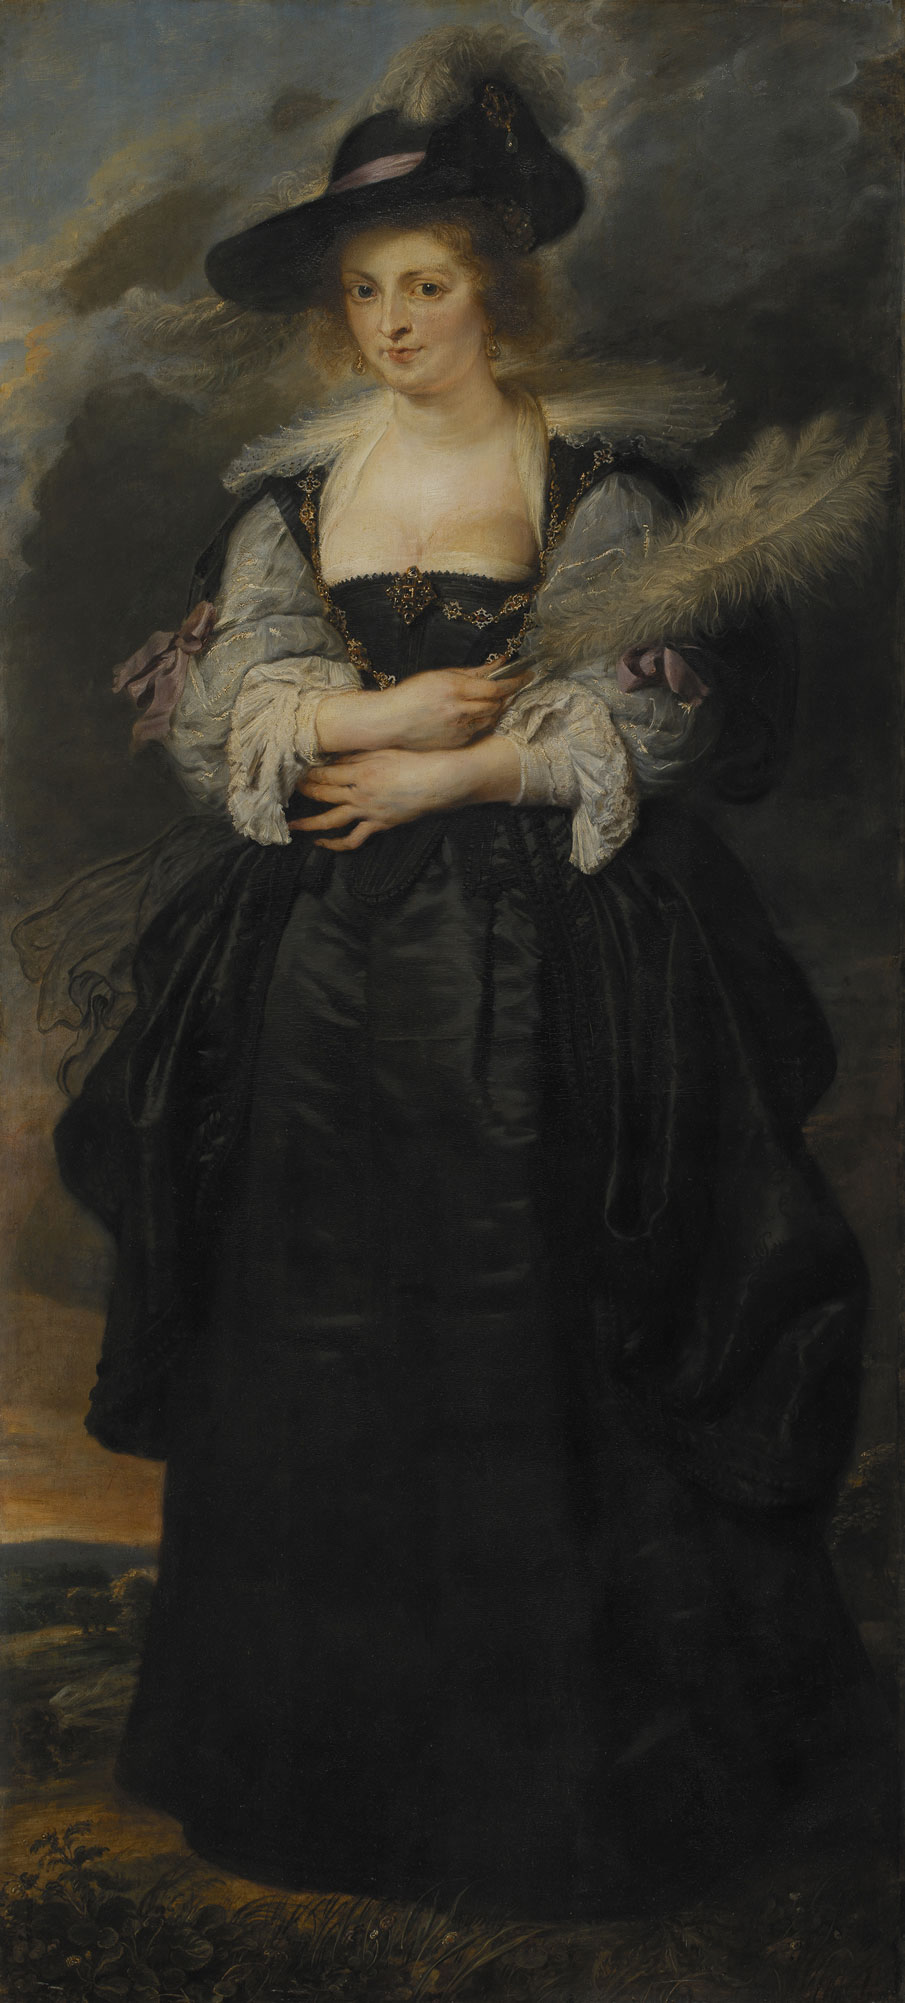 Peter Paul Rubens, Ritratto di Helena Fourment (1630-1632; olio su tavola, 186 x 85 cm; Lisbona, Museo Gulbenkian)
